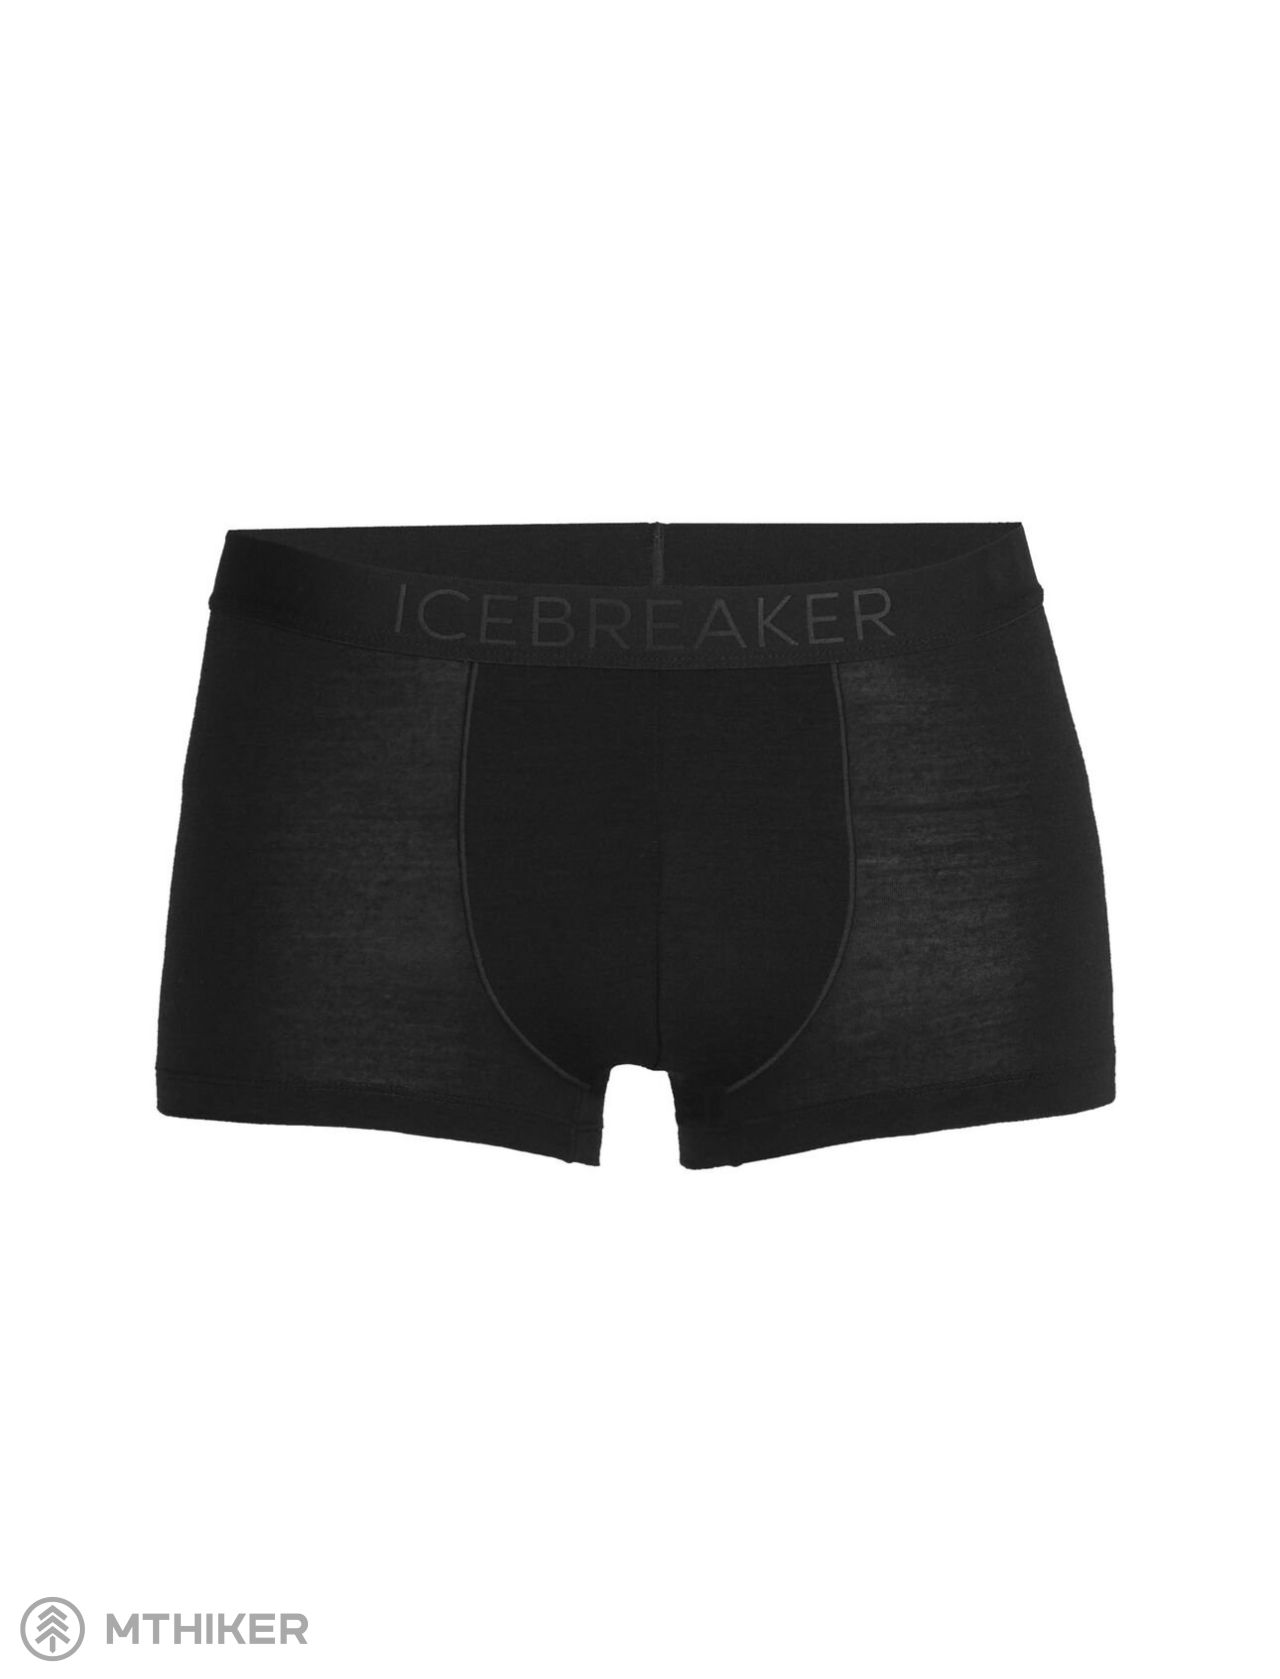 Icebreaker Anatomica Cool-Lite Boxers - Men's